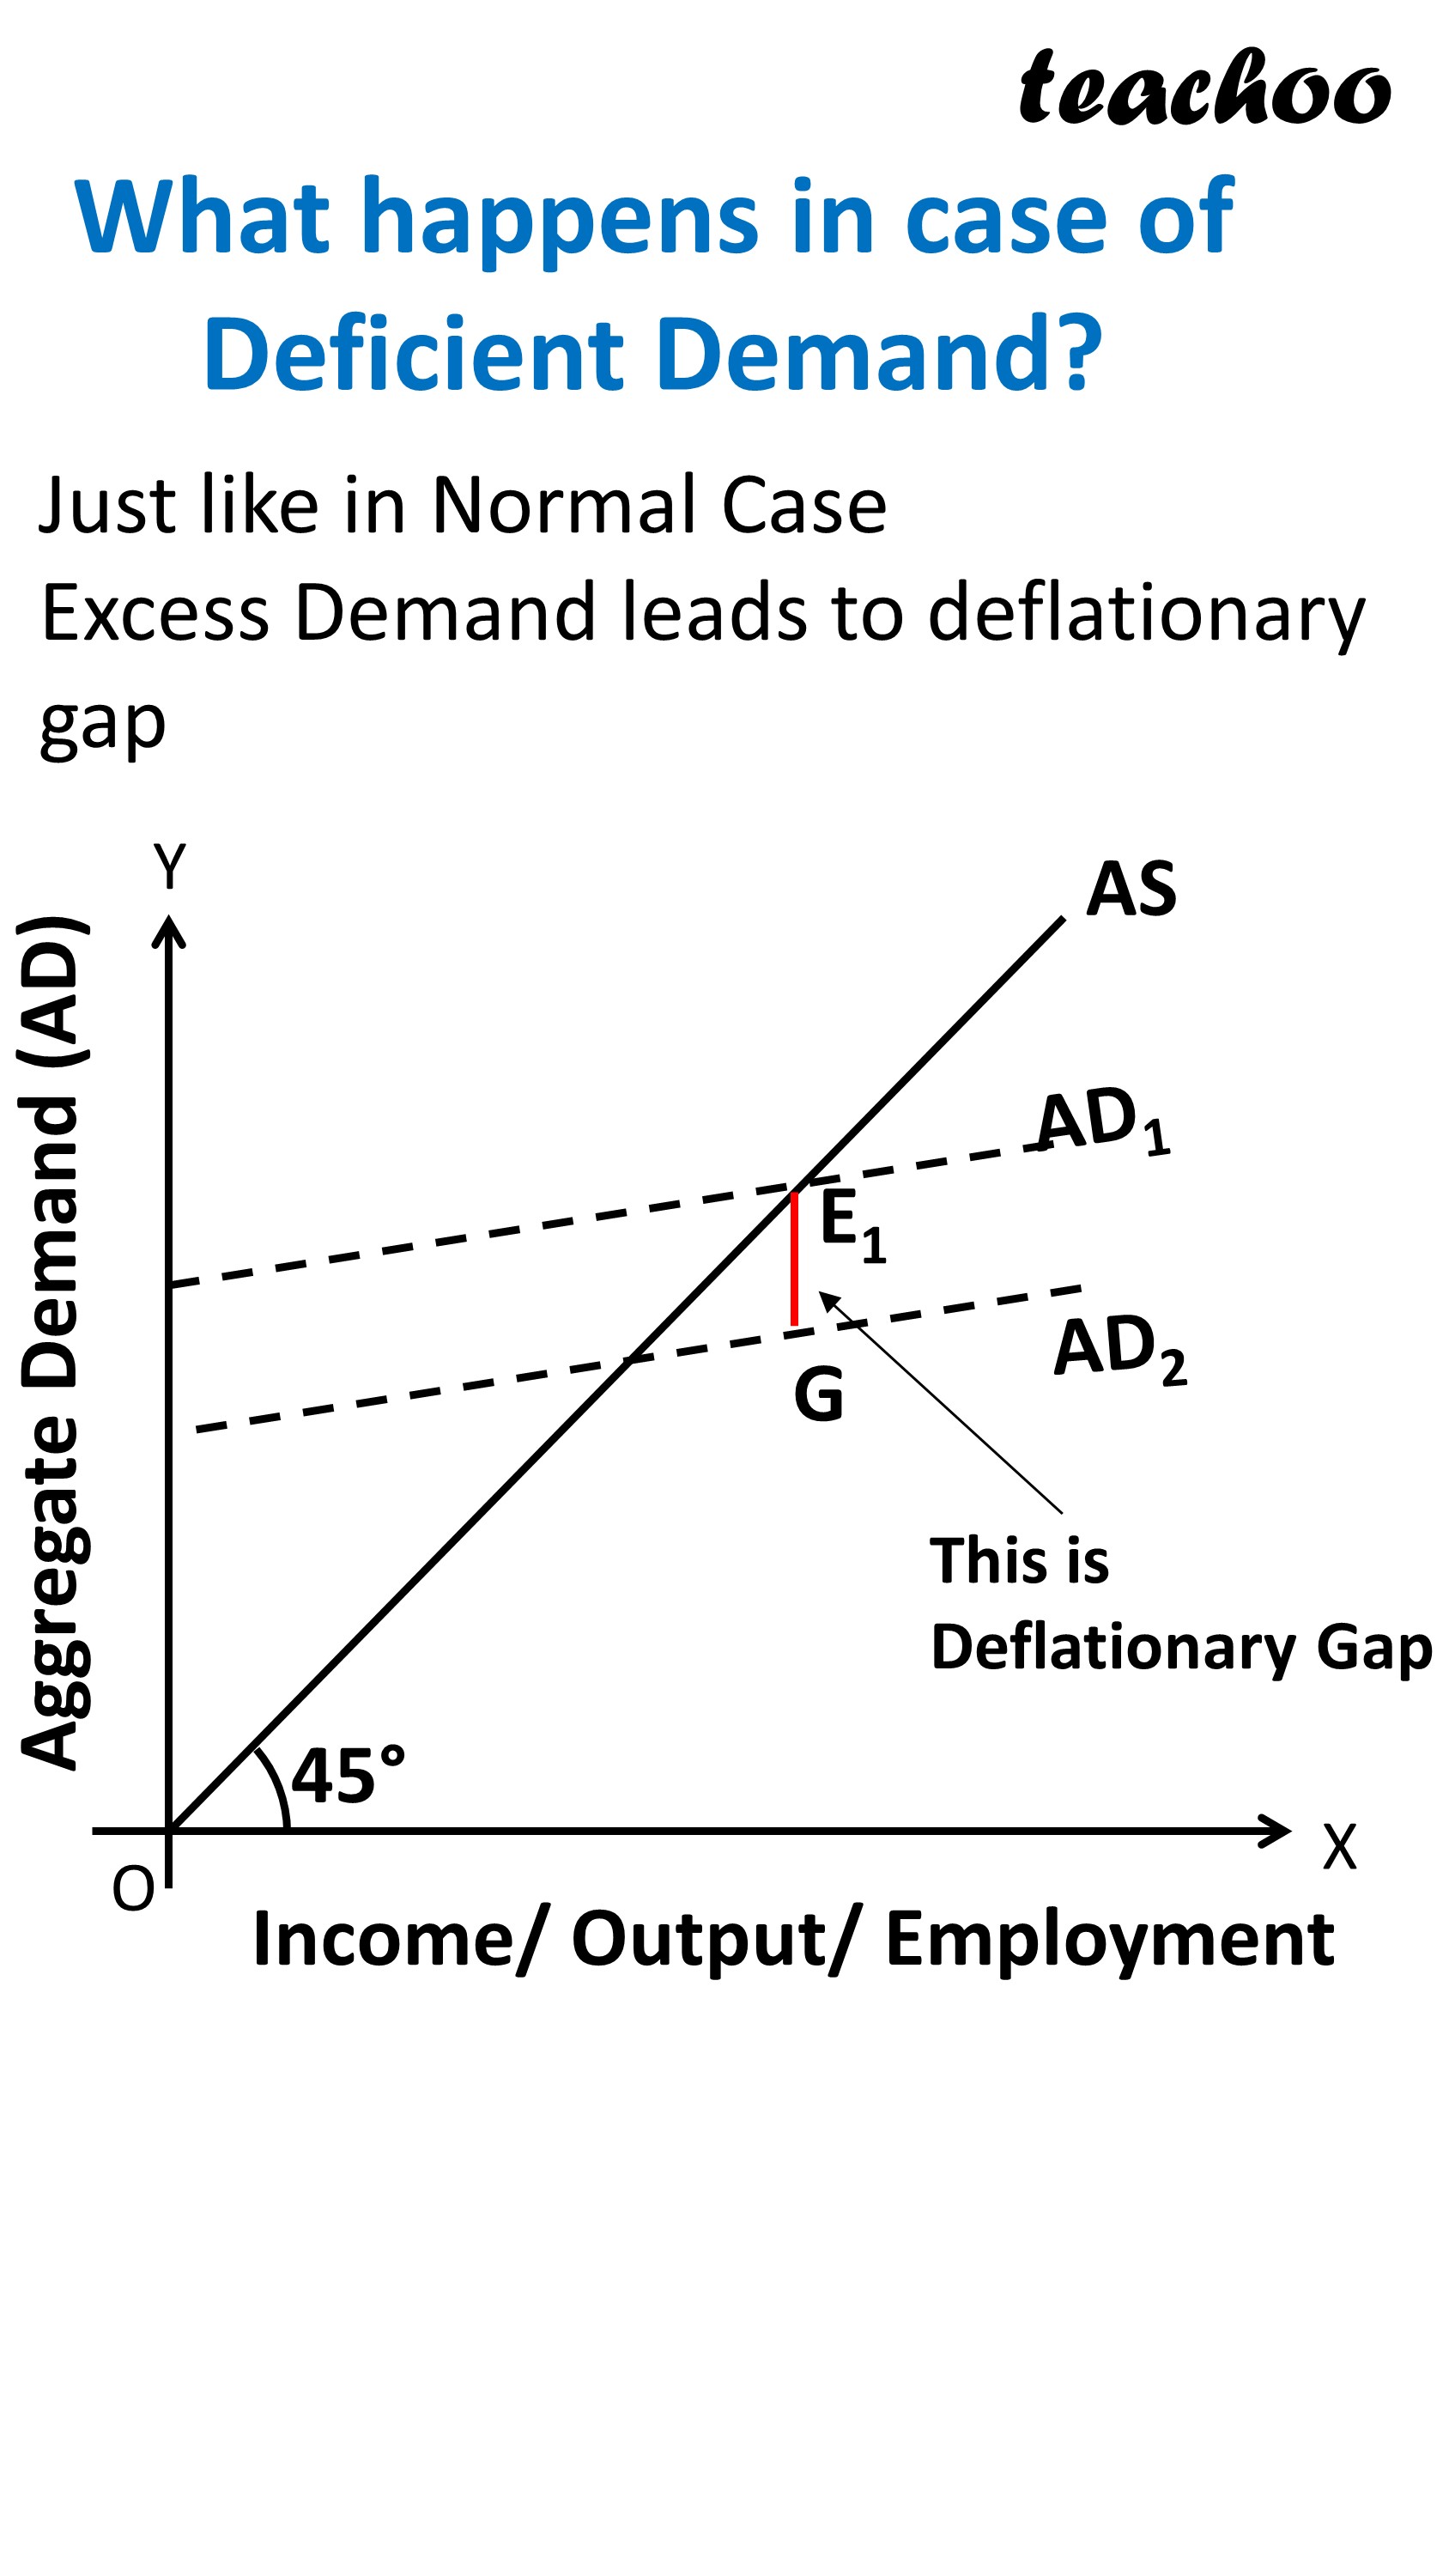 What happens in case of Deficient Demand - Teachoo.JPG